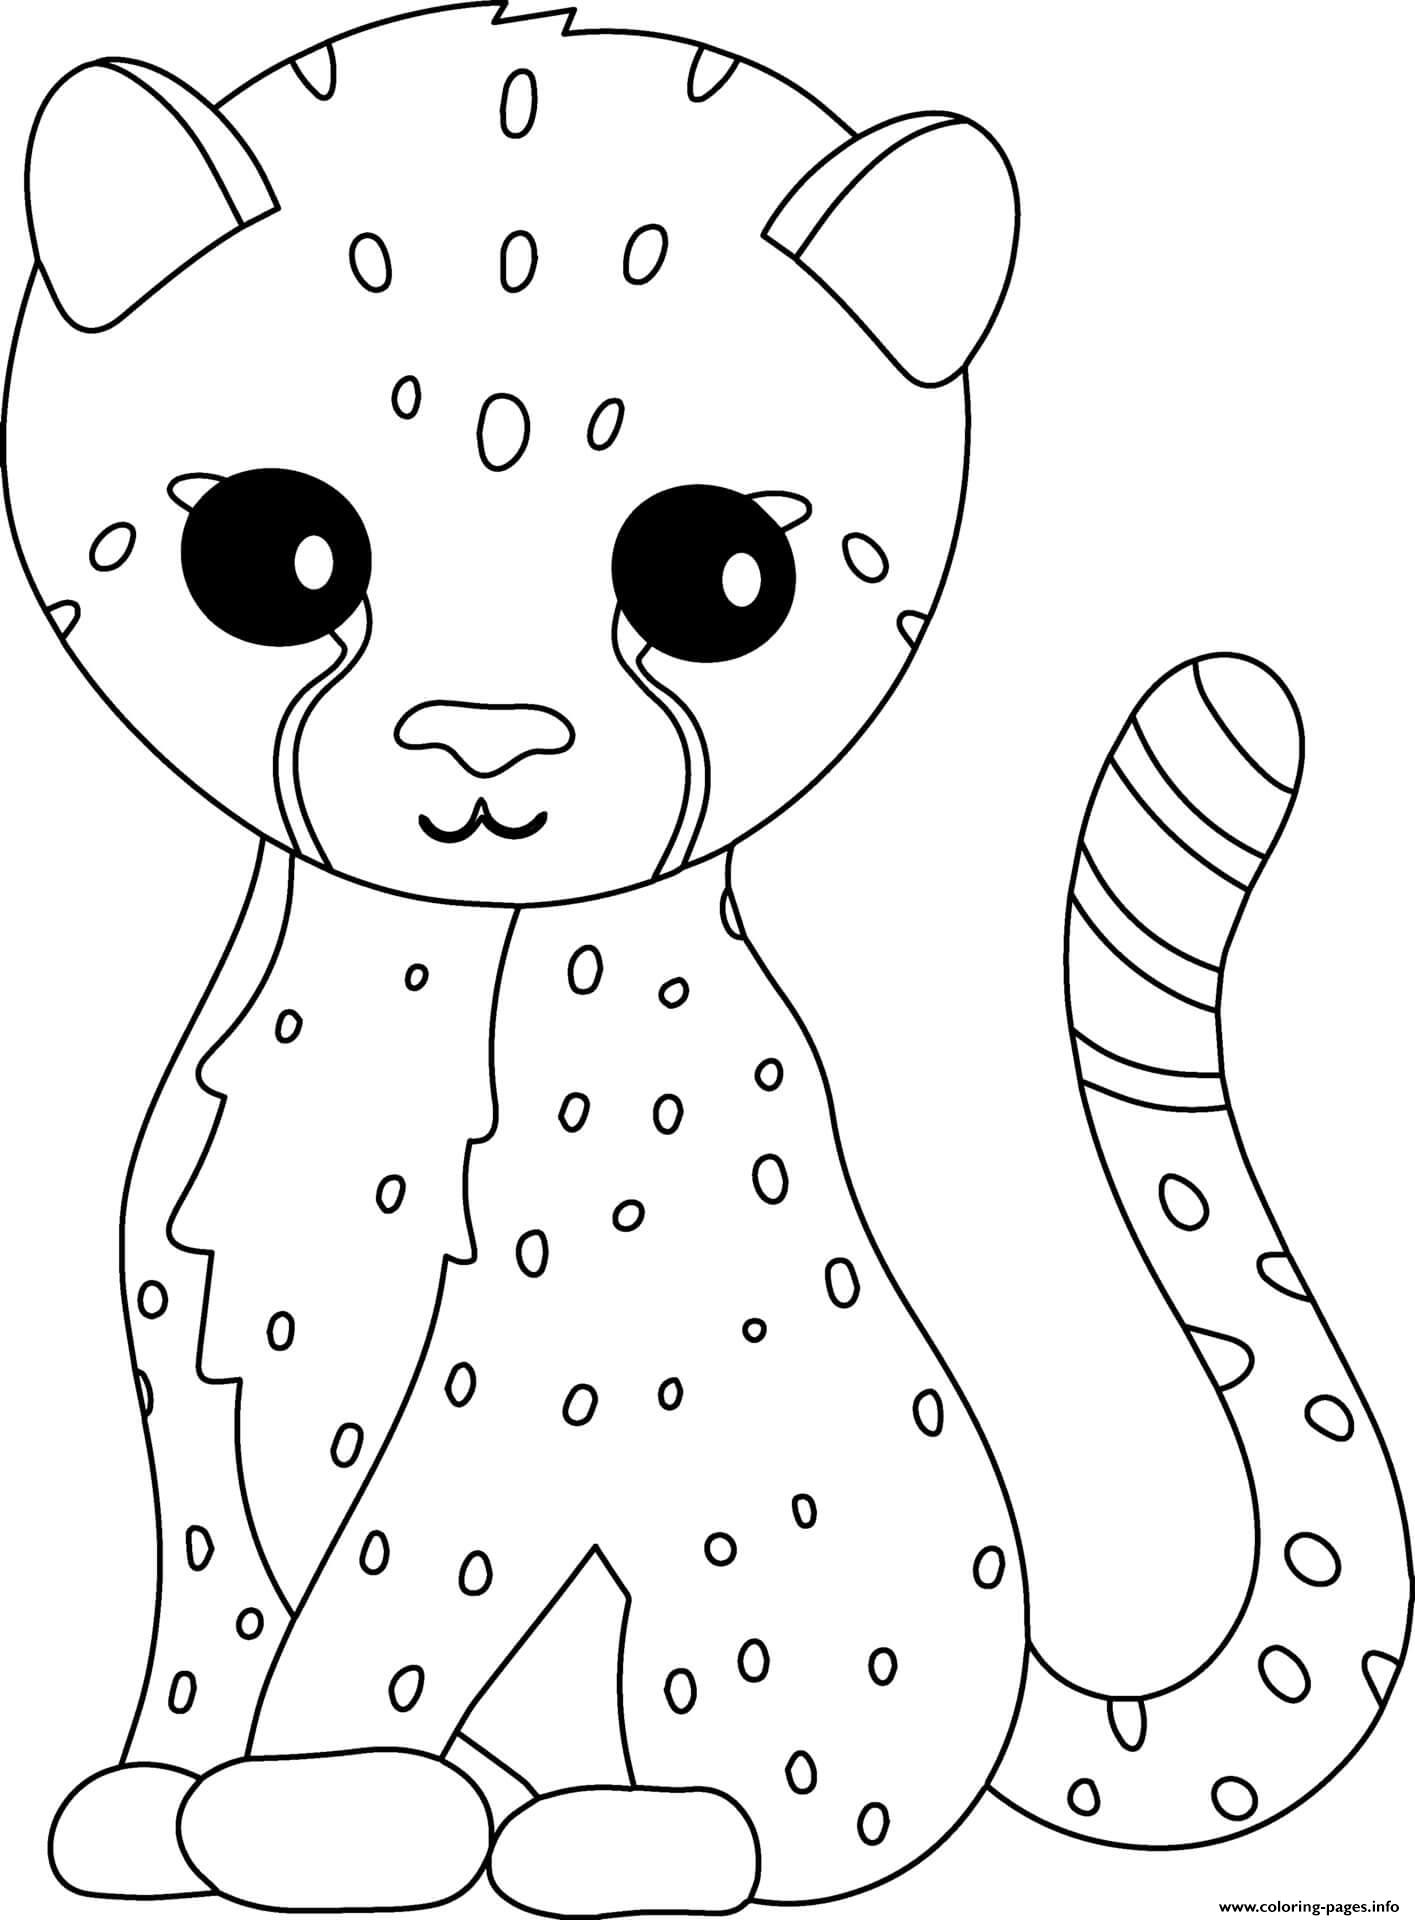 Cheetah Coloring Pages Printable